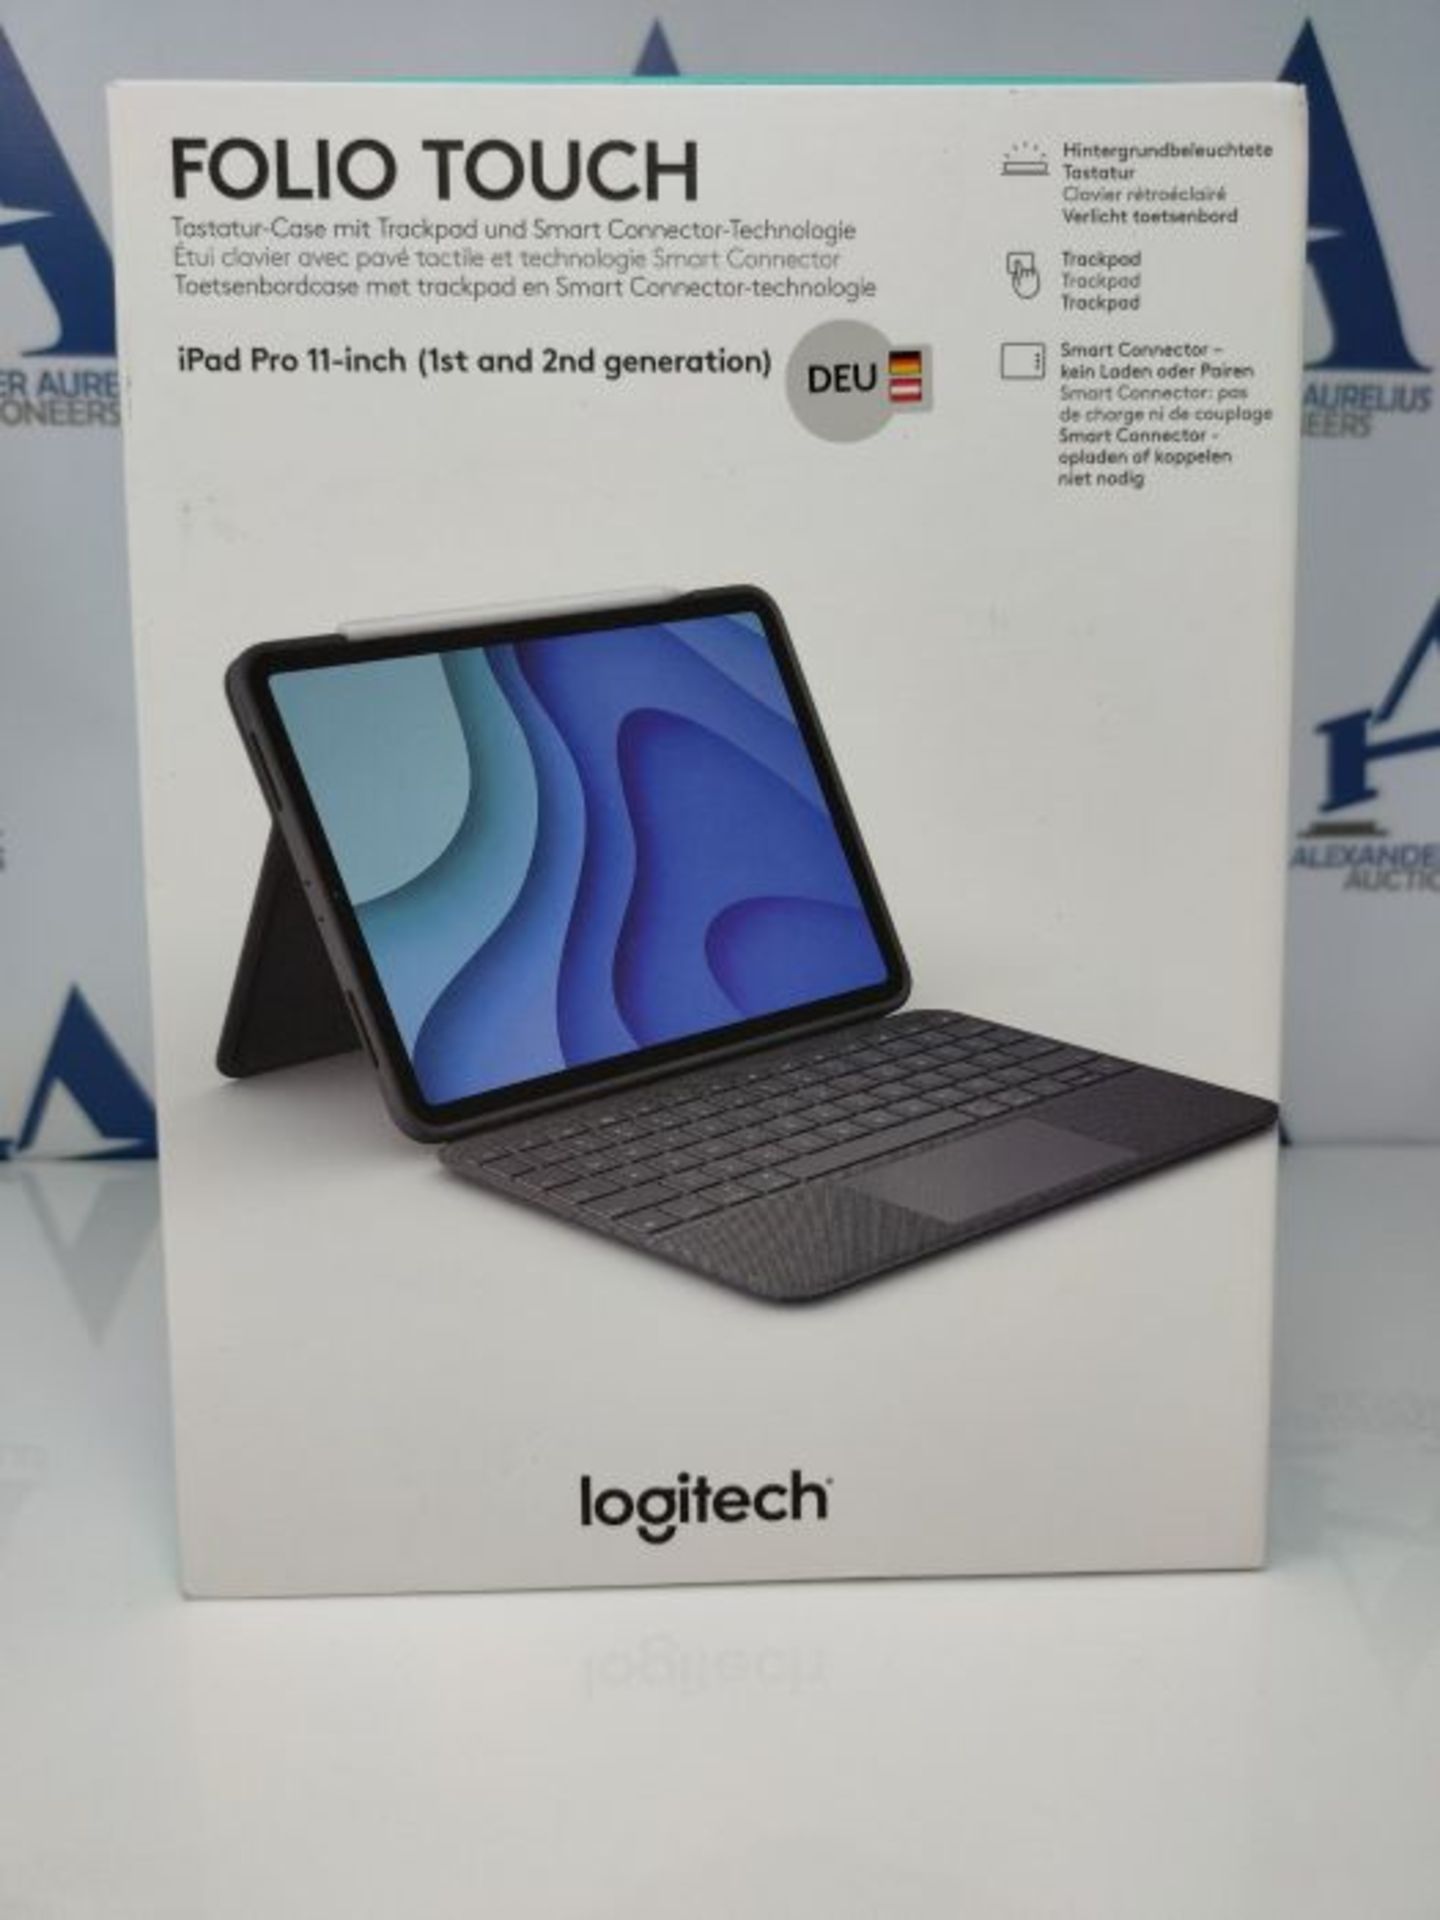 RRP £115.00 Logitech Folio Touch iPad Keyboard Case, QWERTZ German layout - Graphite - Image 2 of 3